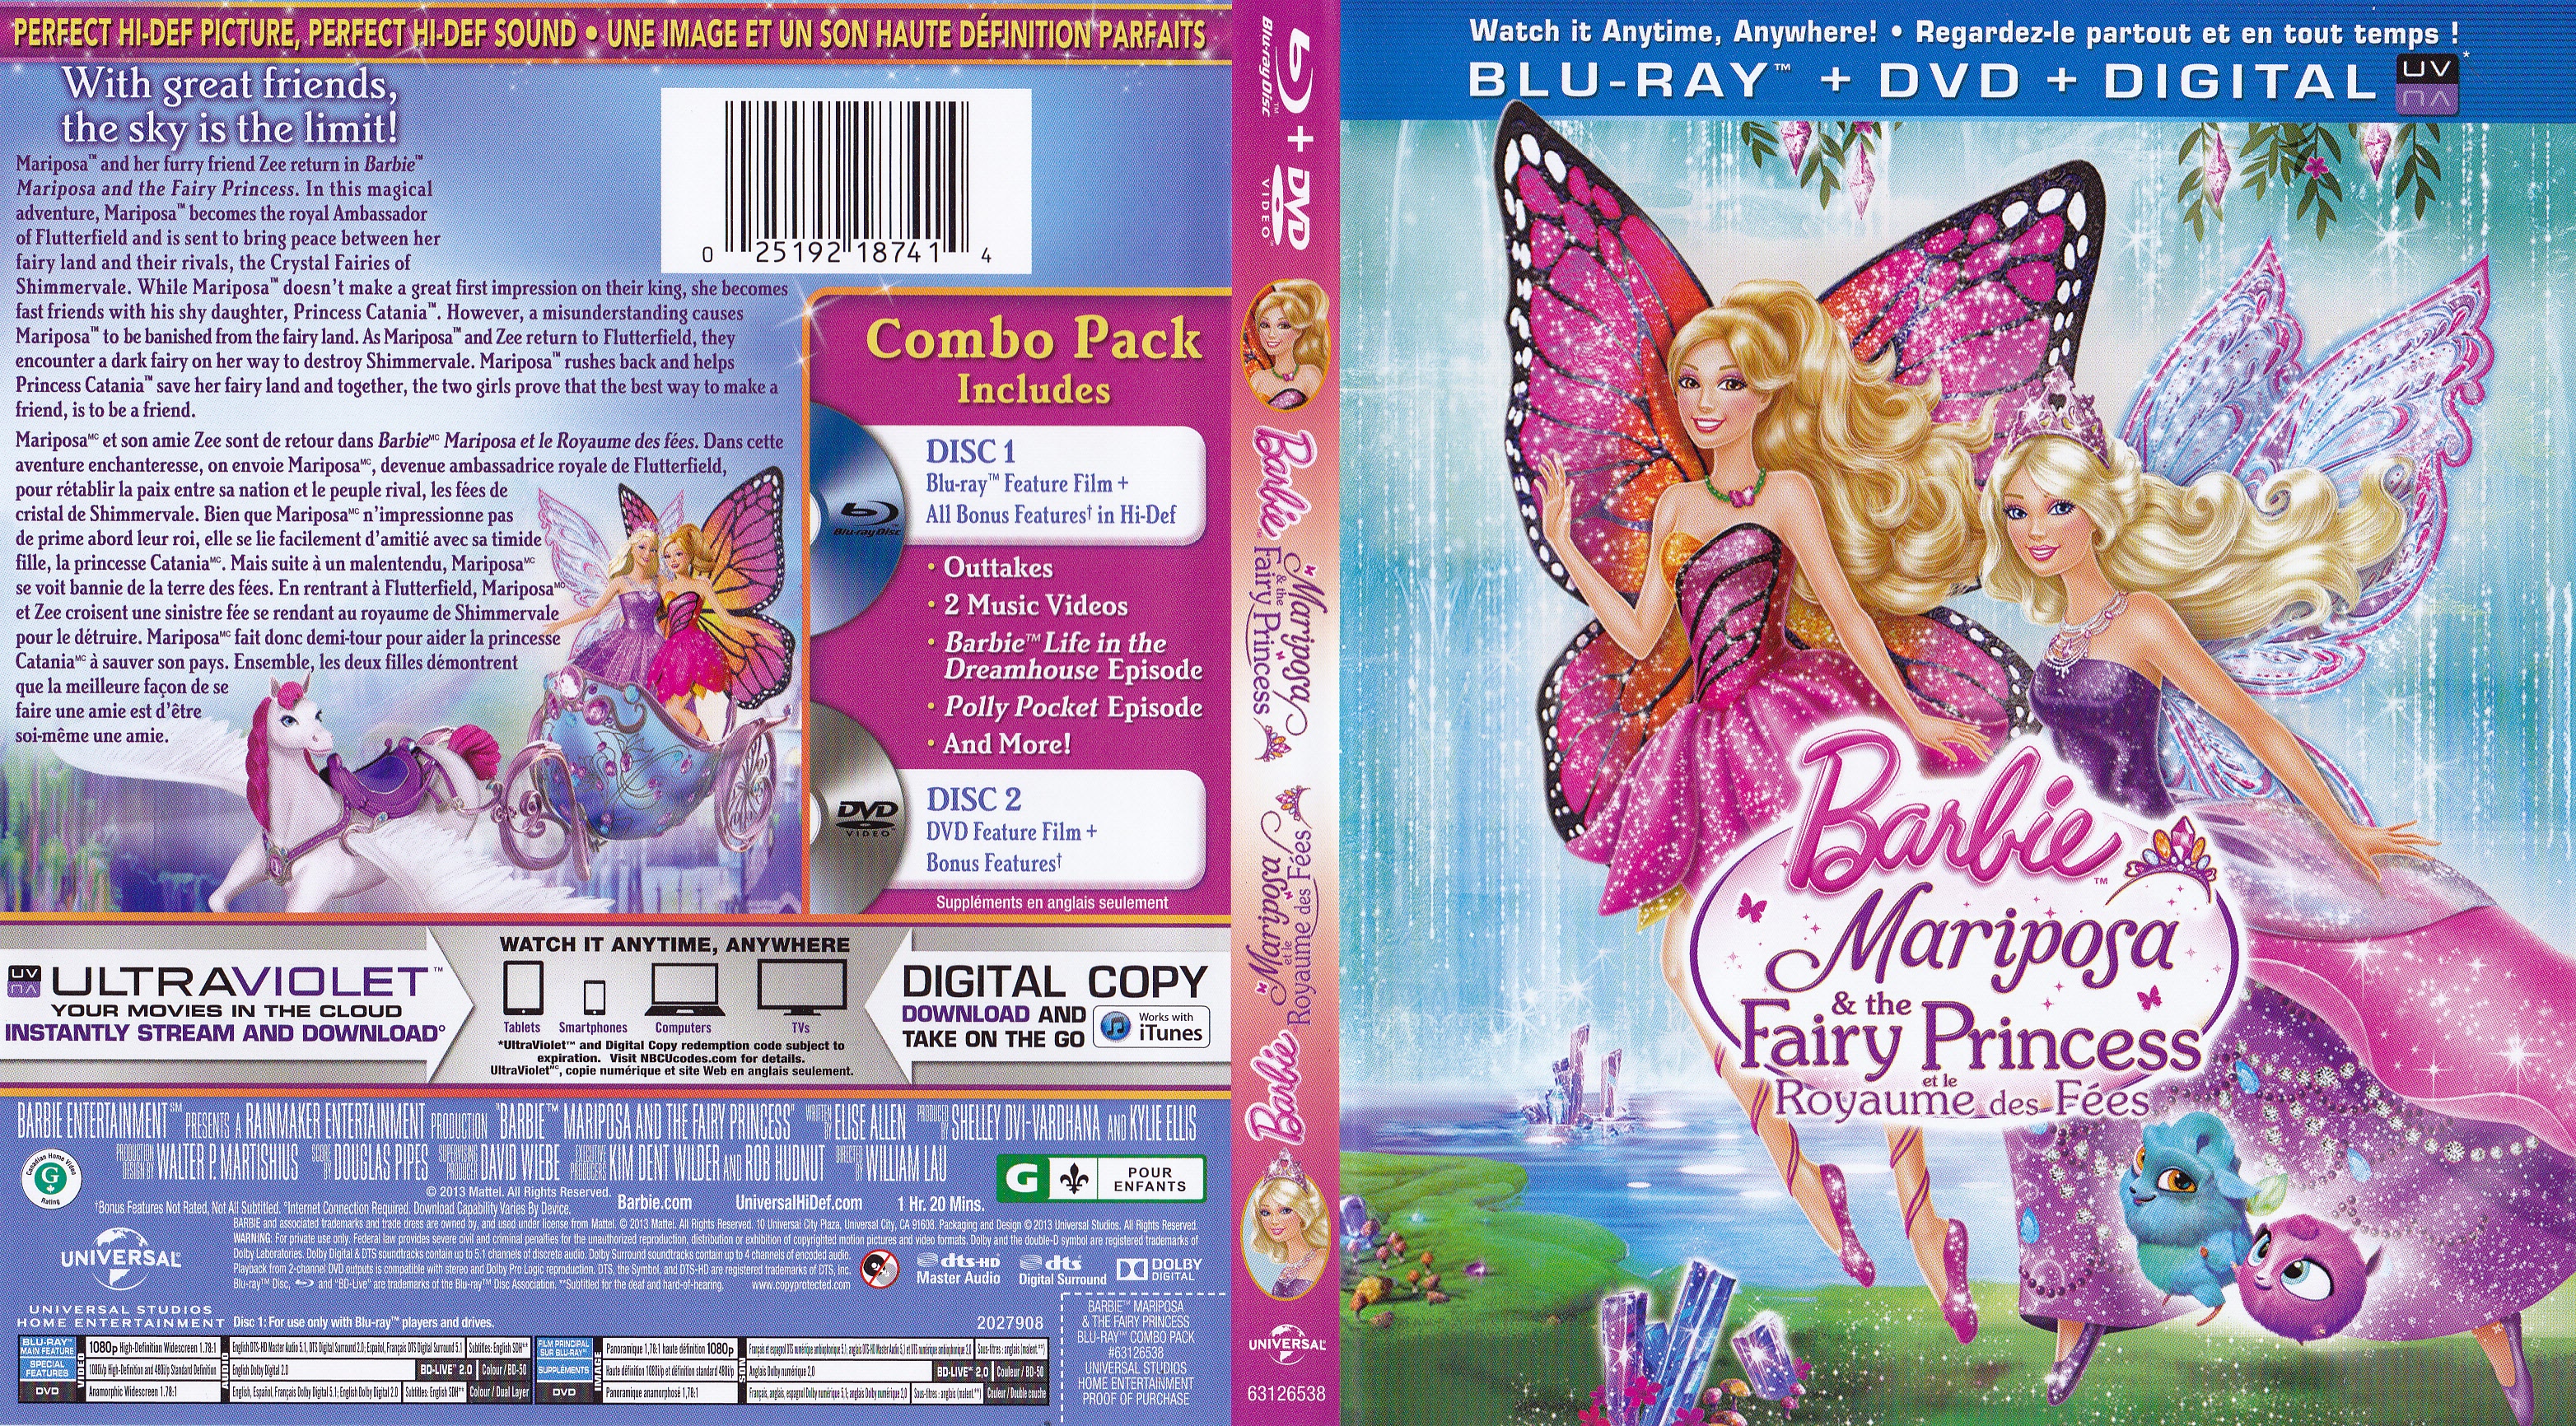 Jaquette DVD Barbie Mariposa and the fairy princess - Barbie mariposa et ses amies les fes papillons (Canadienne) (BLU-RAY)